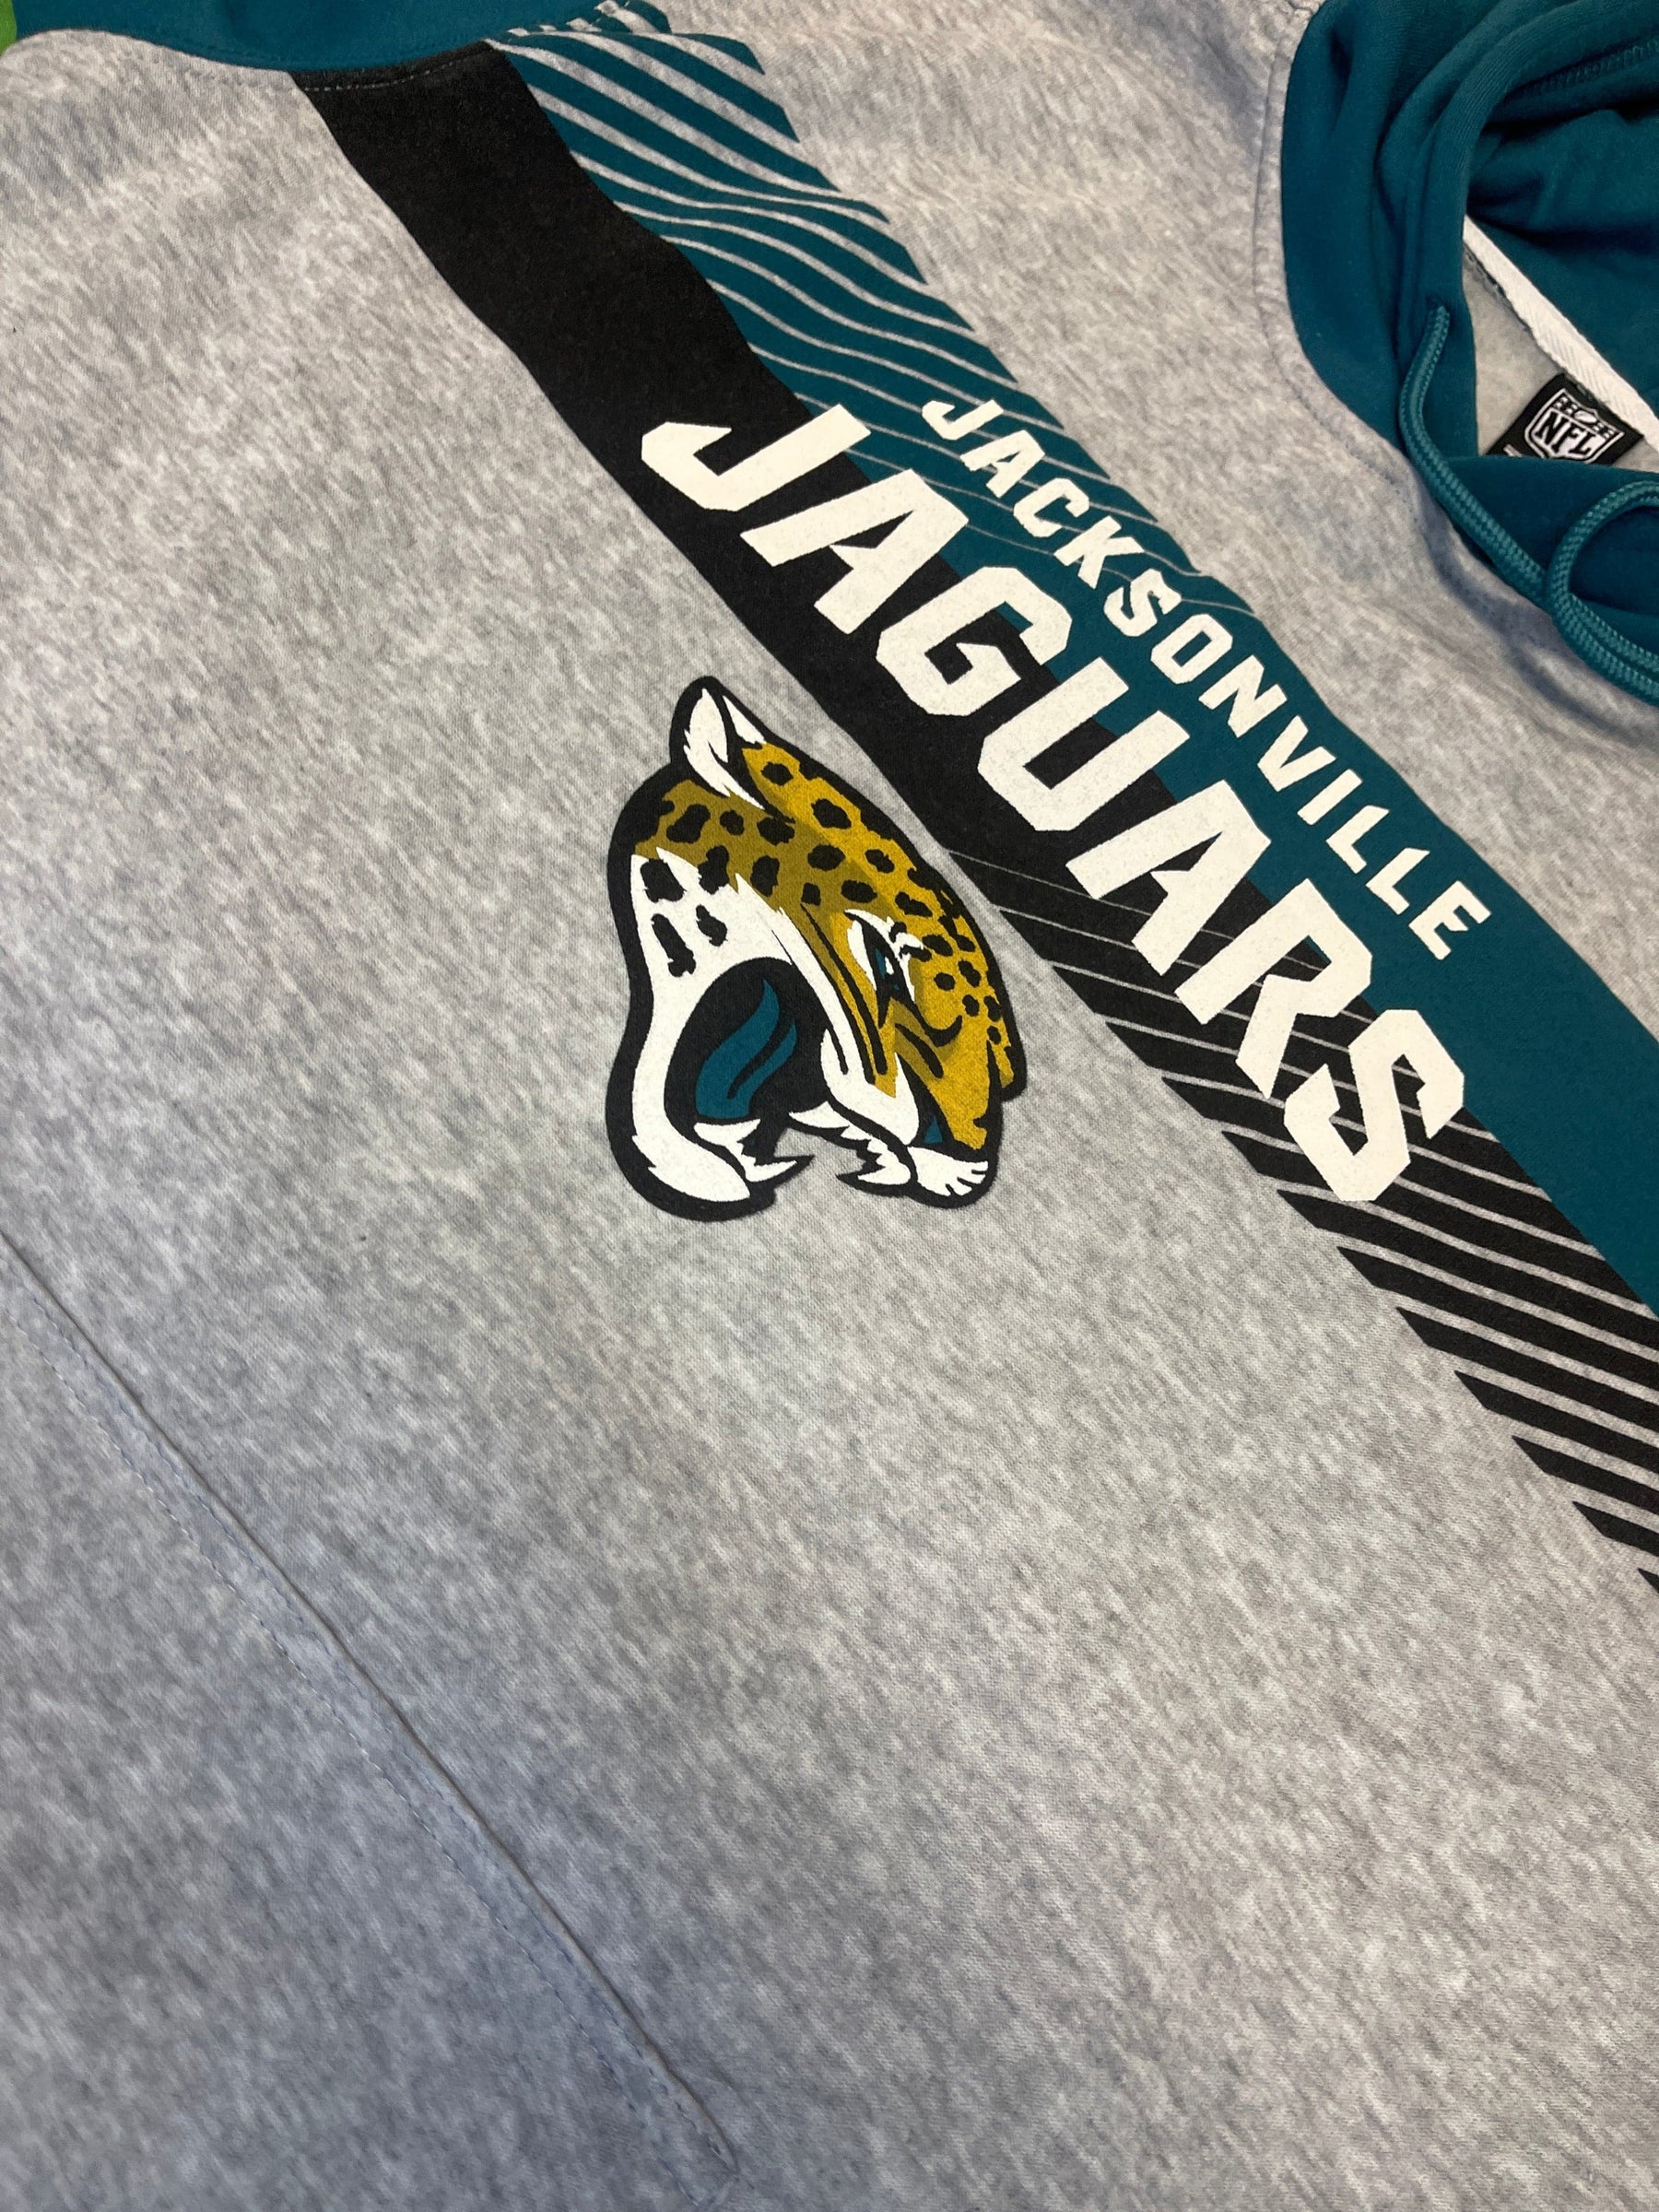 NFL Jacksonville Jaguars Grey Colourblock Hoodie Men's X-Large NWT